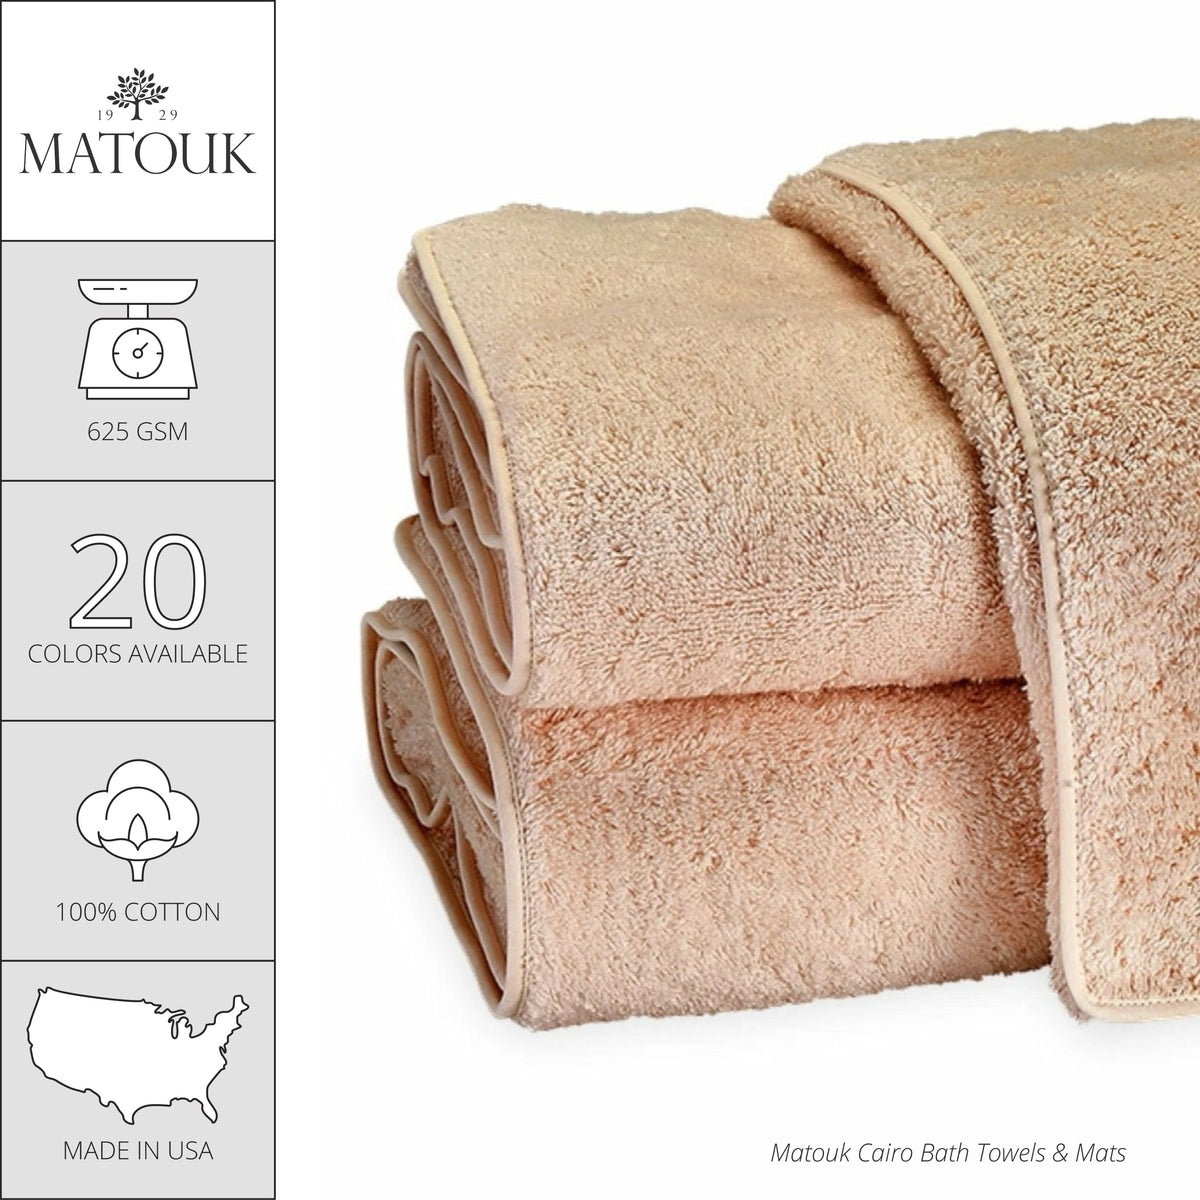 Matouk Cairo Scallop Bath Towels and Mats - Yellow